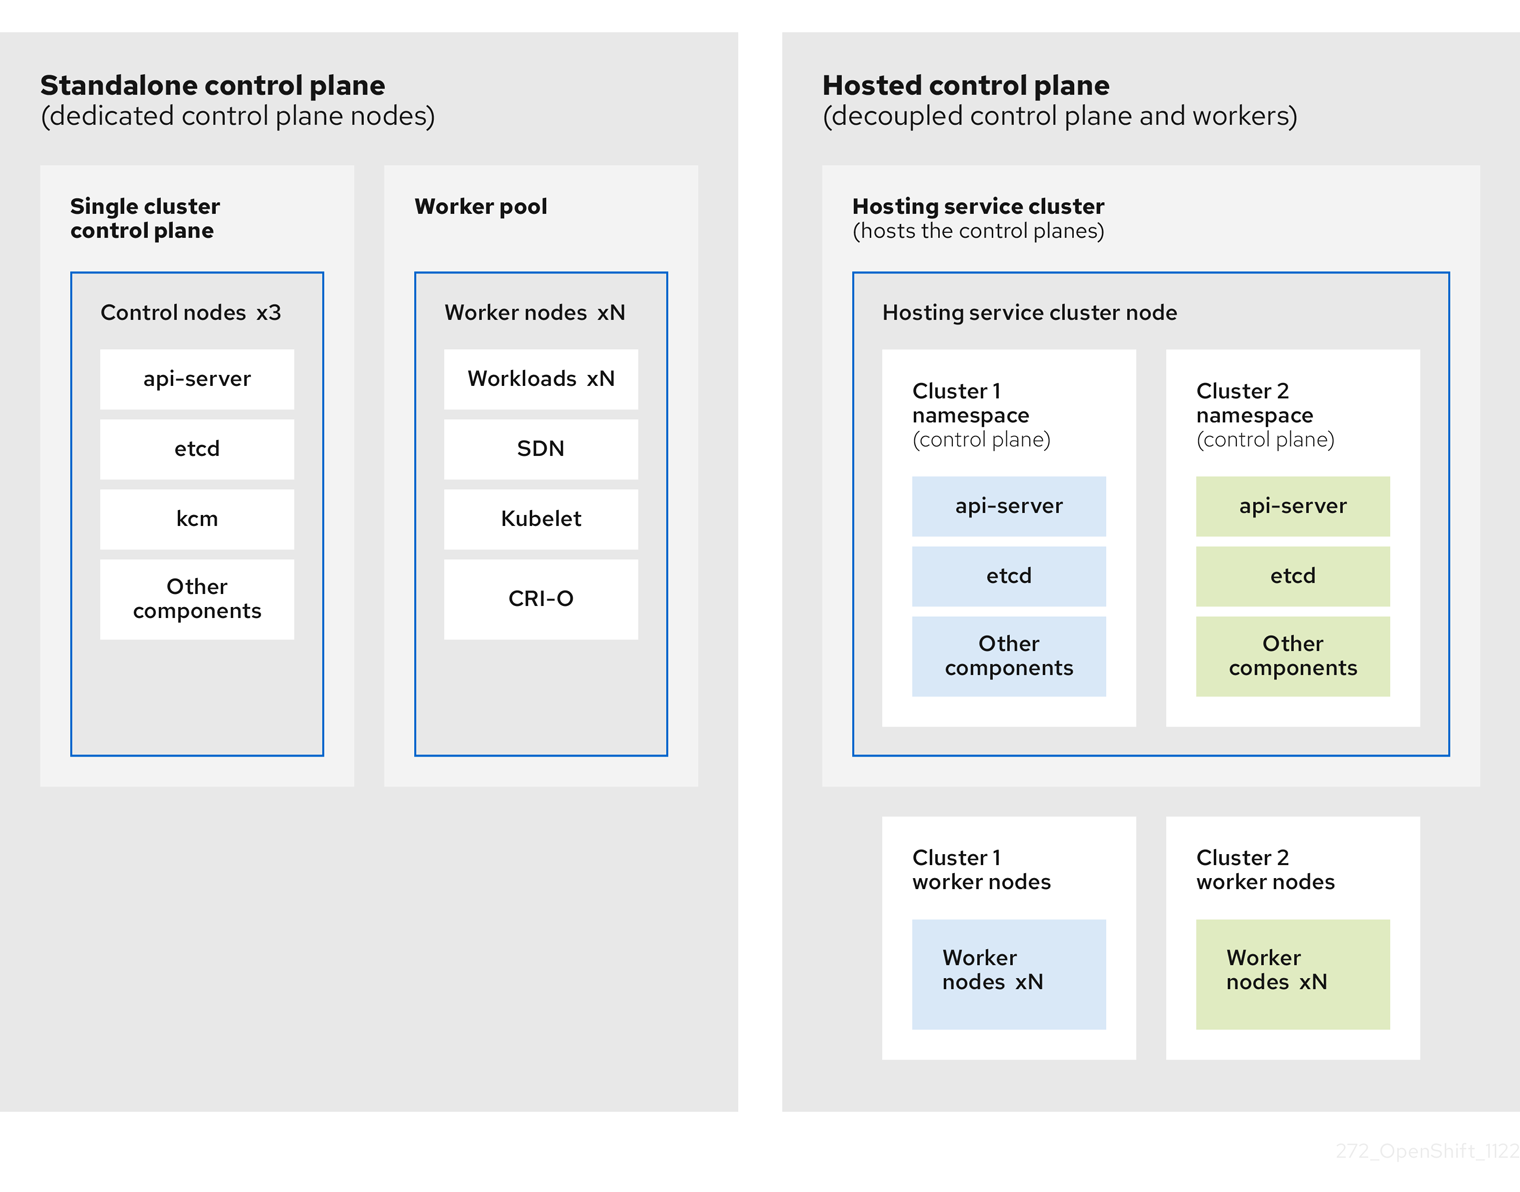 将托管 control plane 模型与 OpenShift 与组合 control plane 和 worker 进行比较